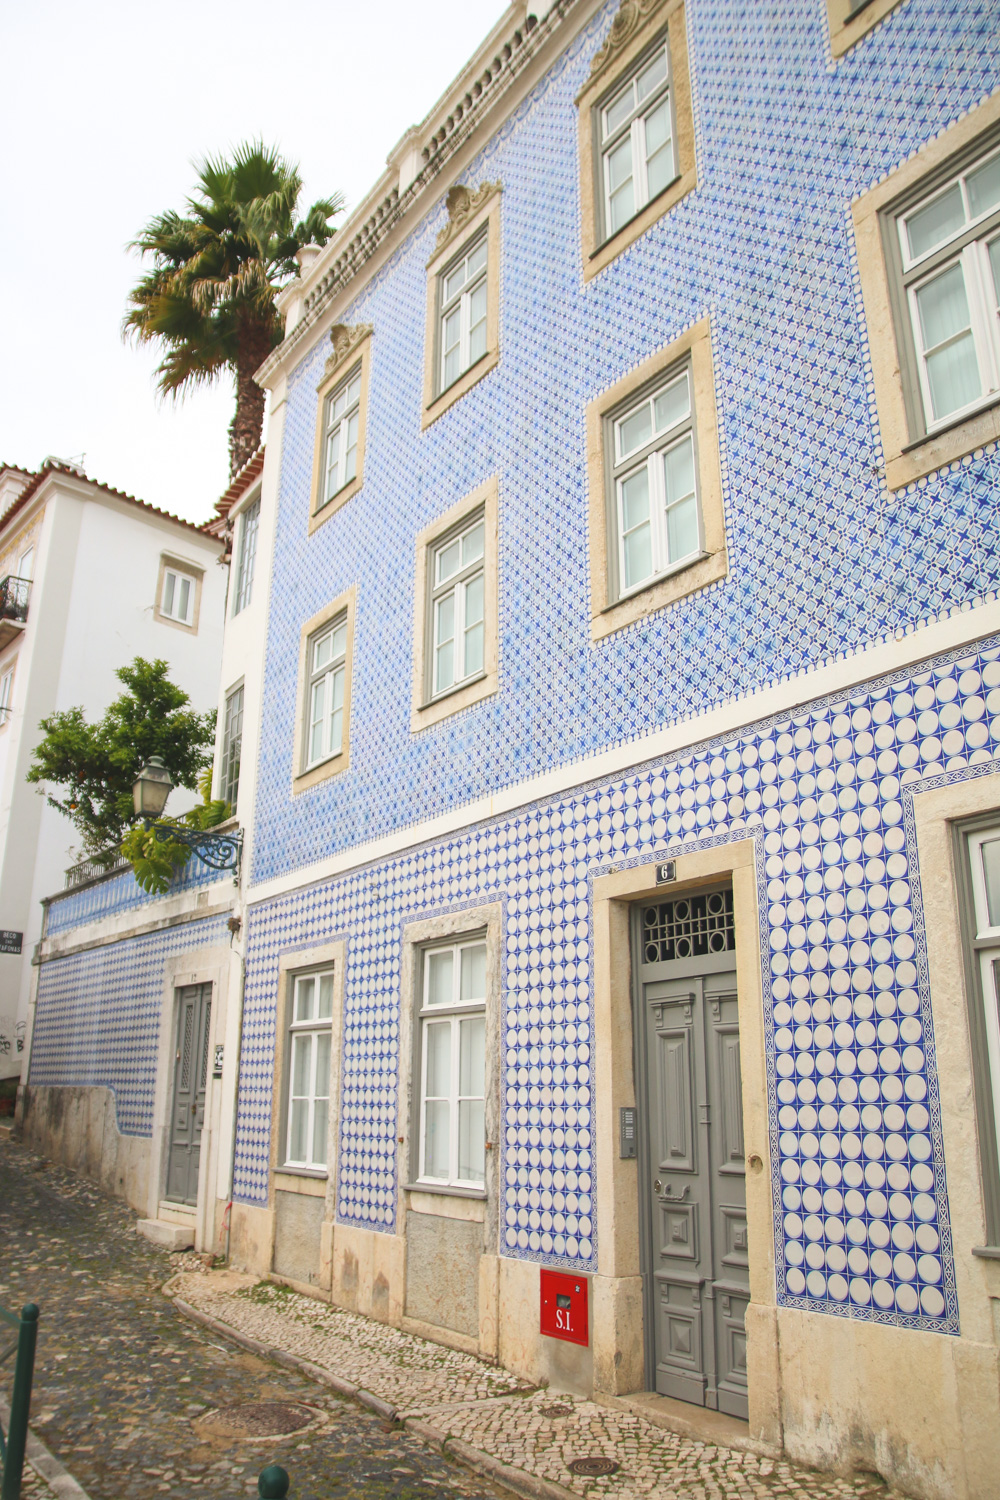 Tiled Builing in Alfama, Lisbon, Portugal